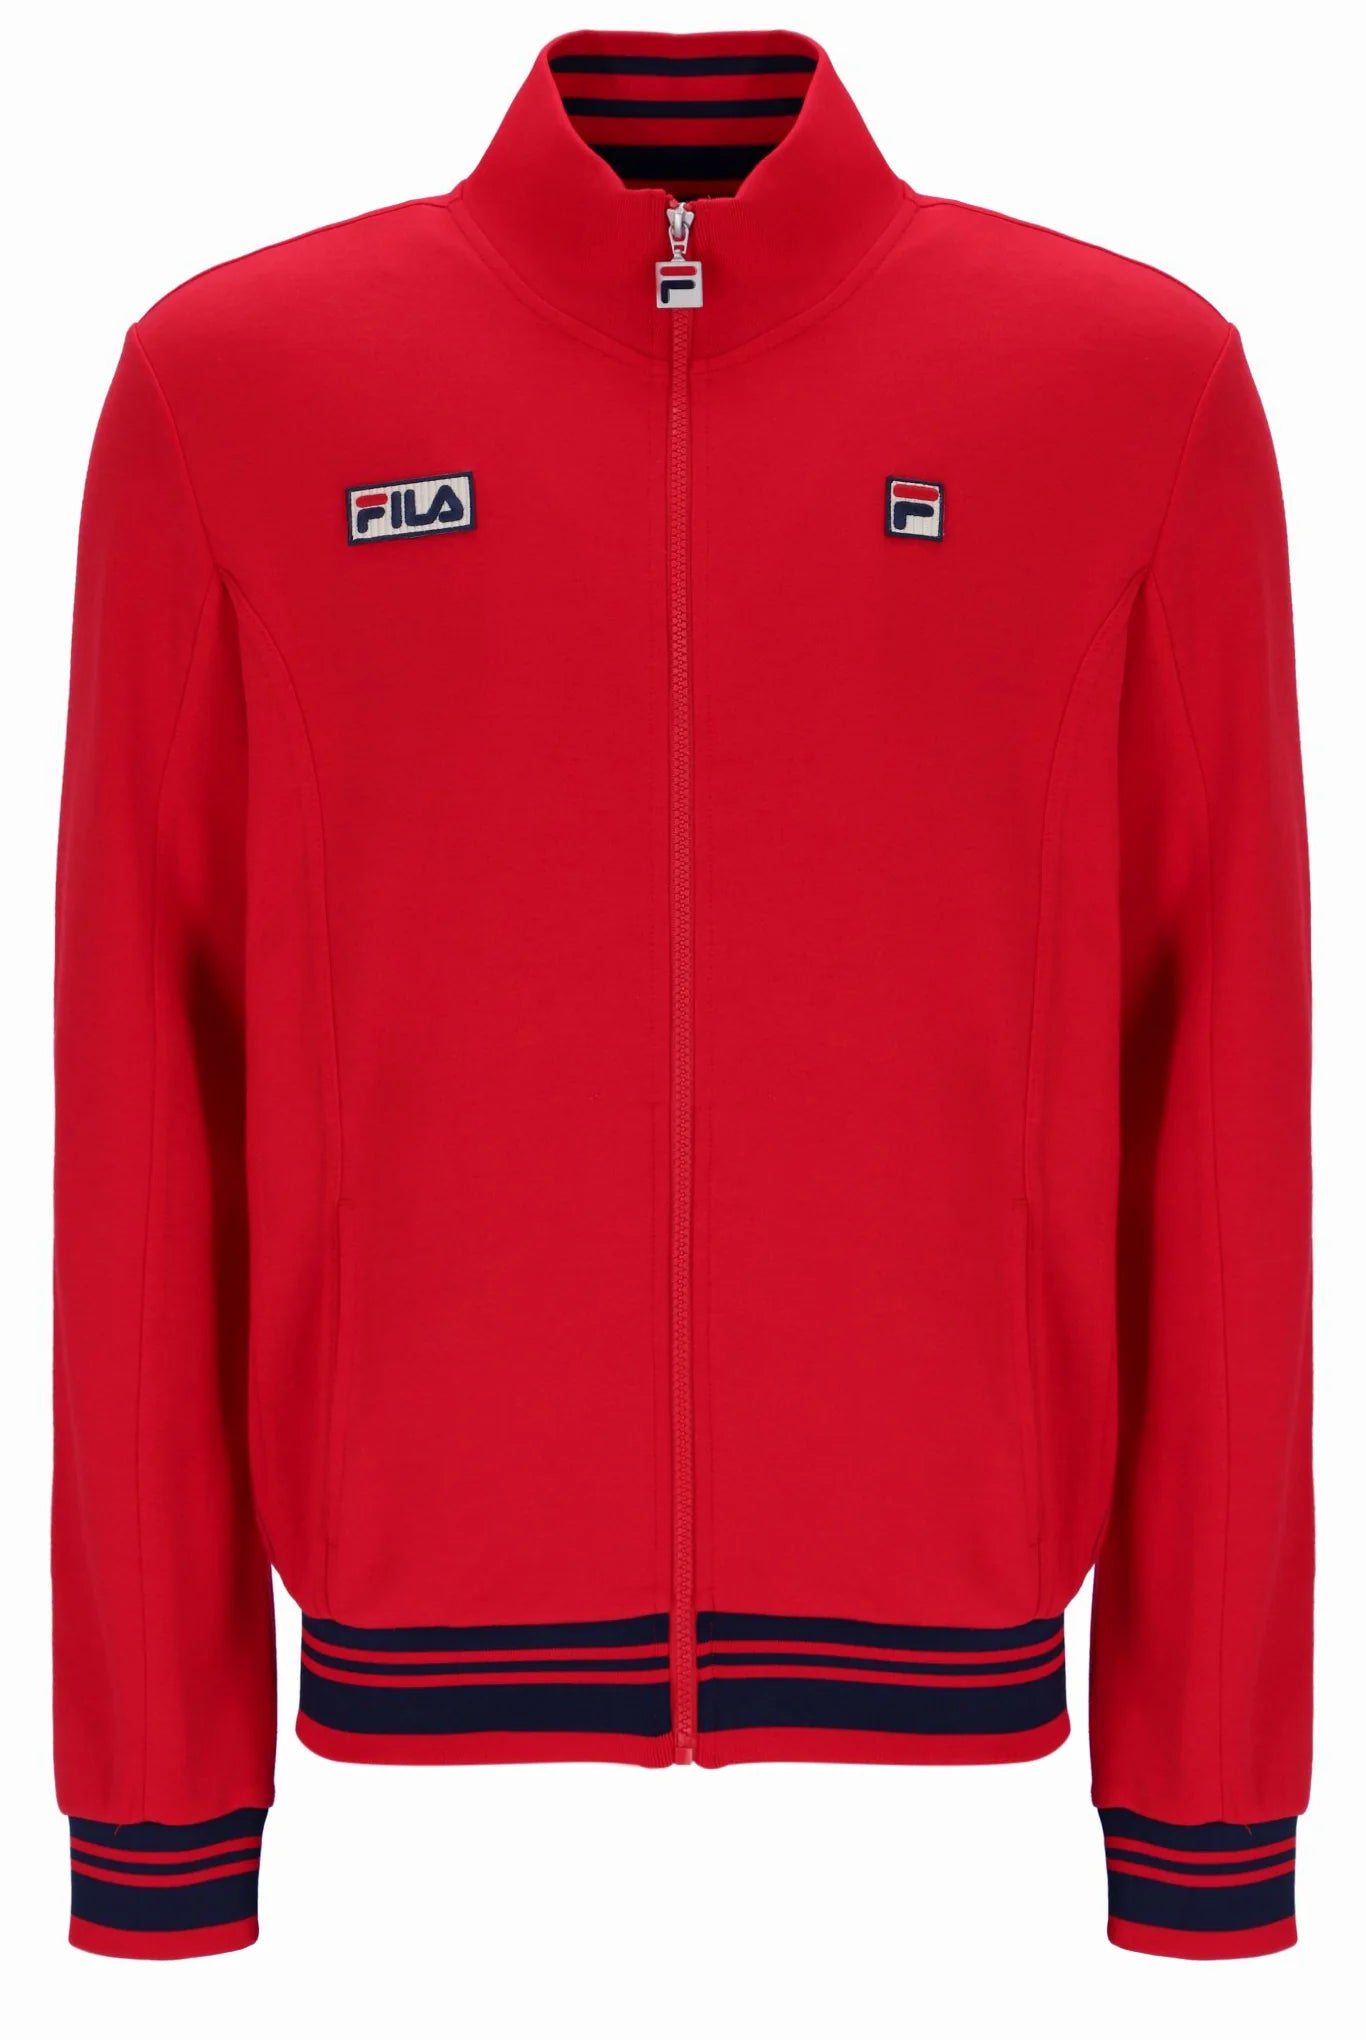 FILA Jamie Settanta Track Top Jacket Red - Raw Menswear